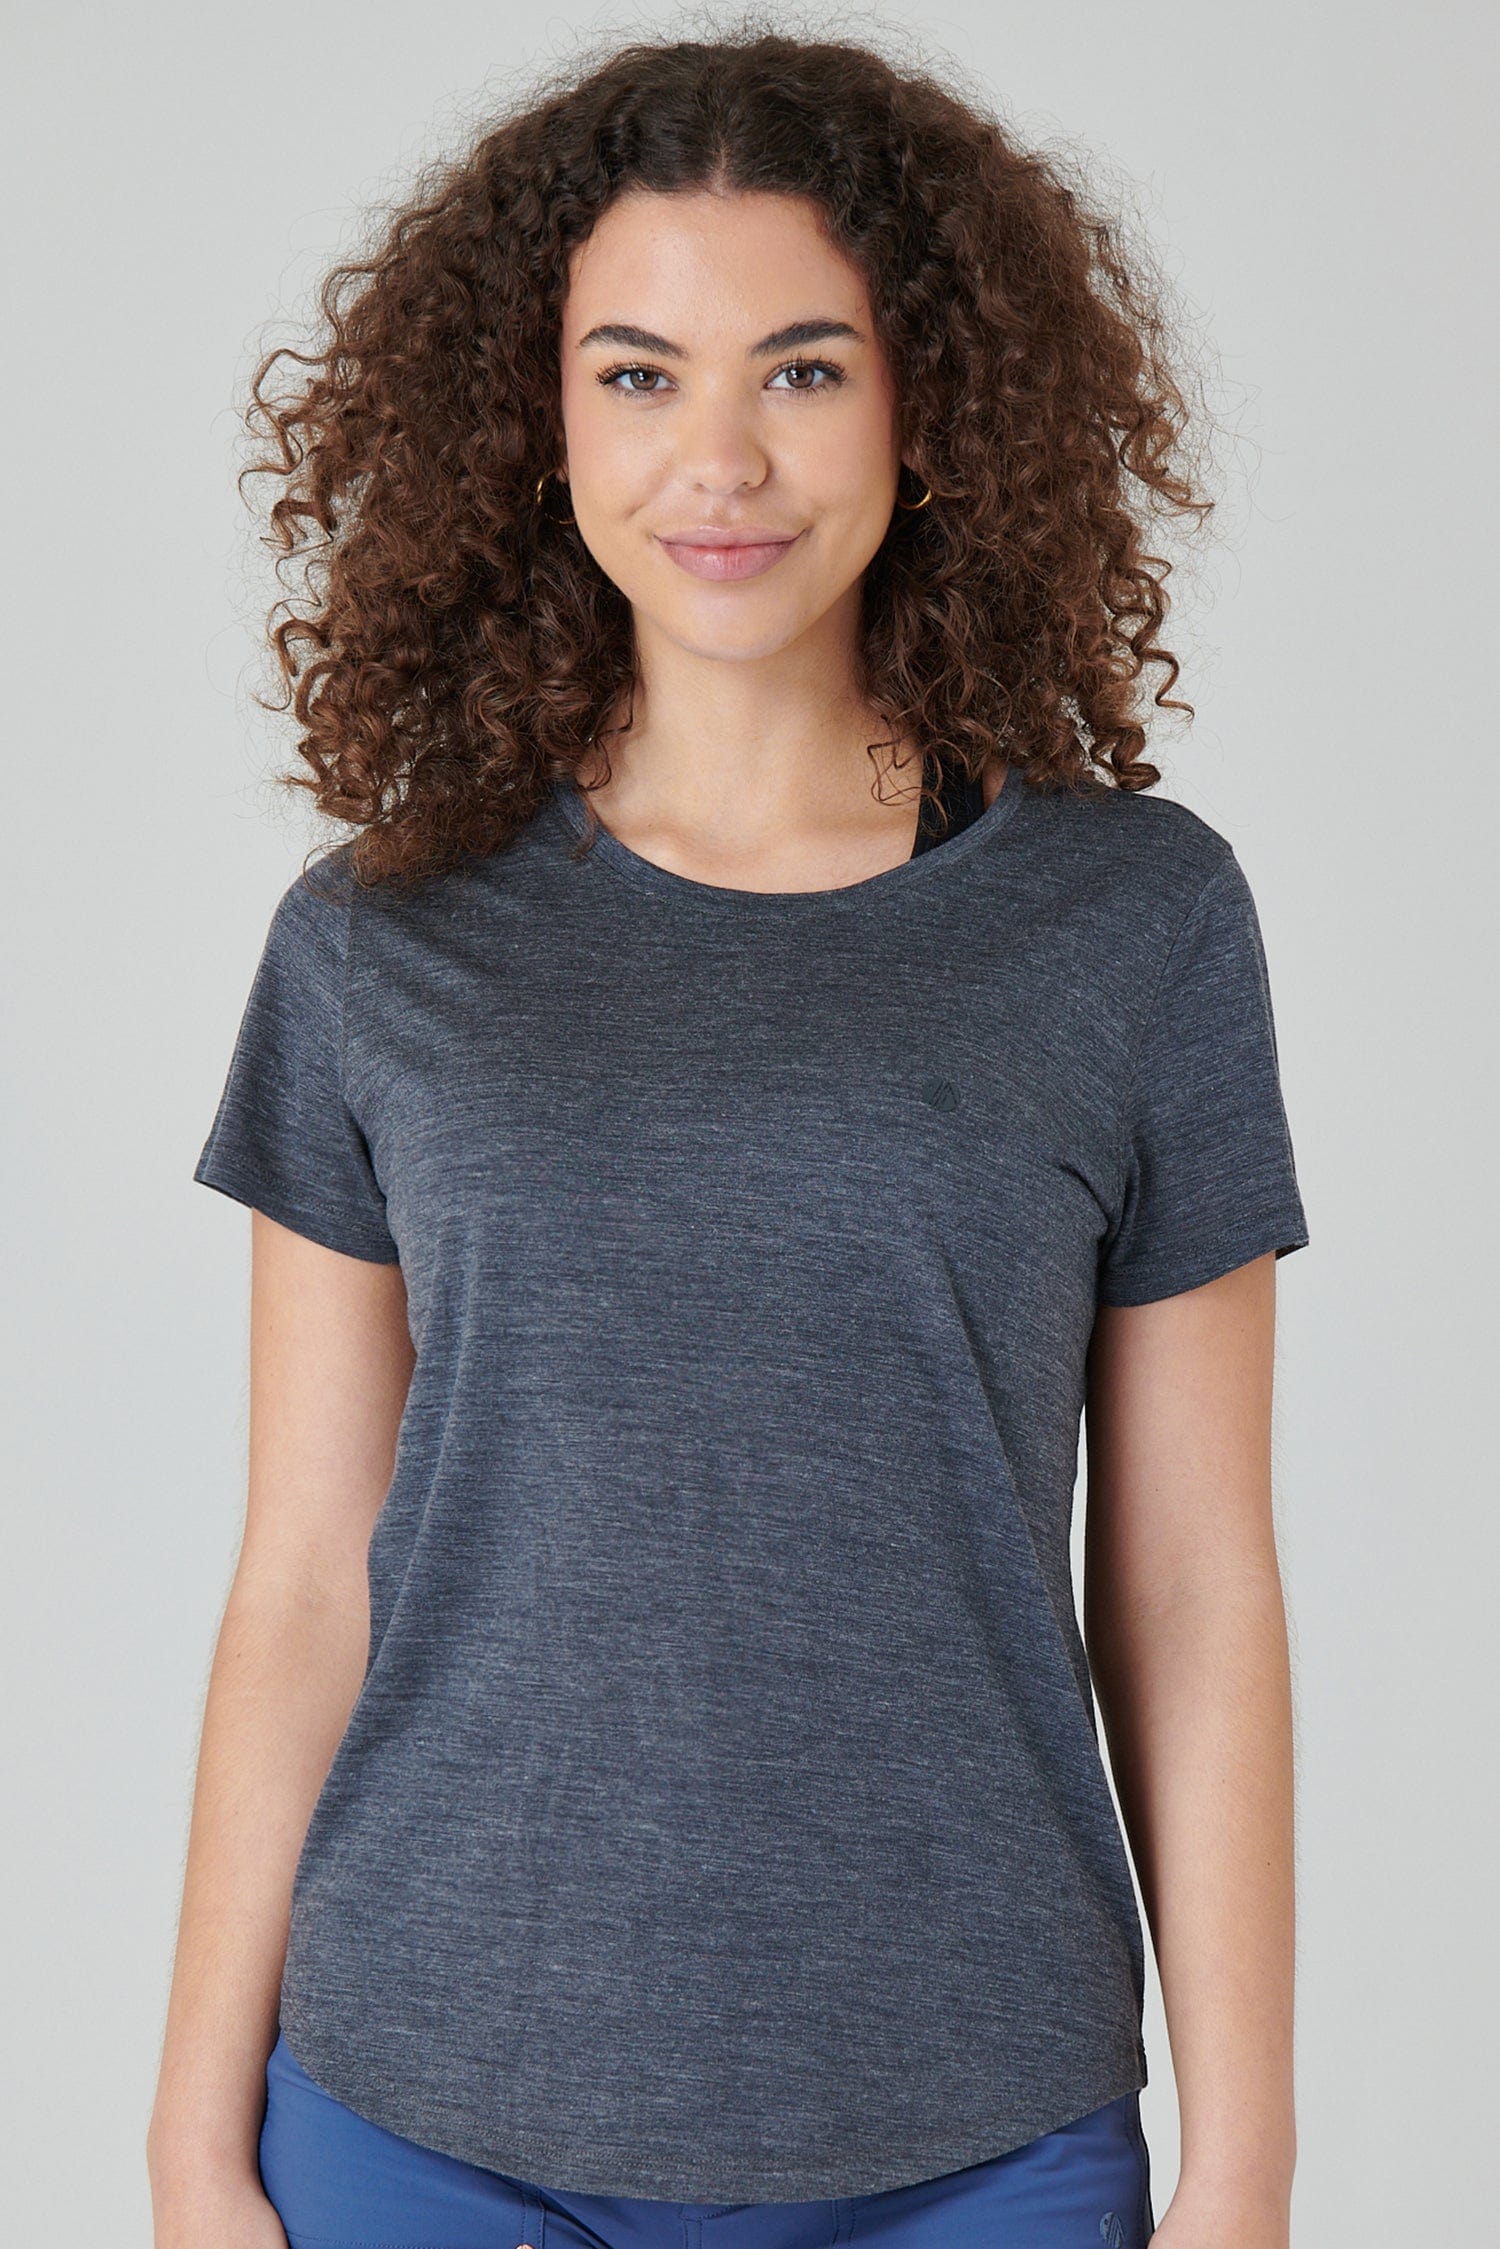 Merino Wool Crew Neck T-shirt - Charcoal - Medium / Uk12 - Womens - Acai Outdoorwear